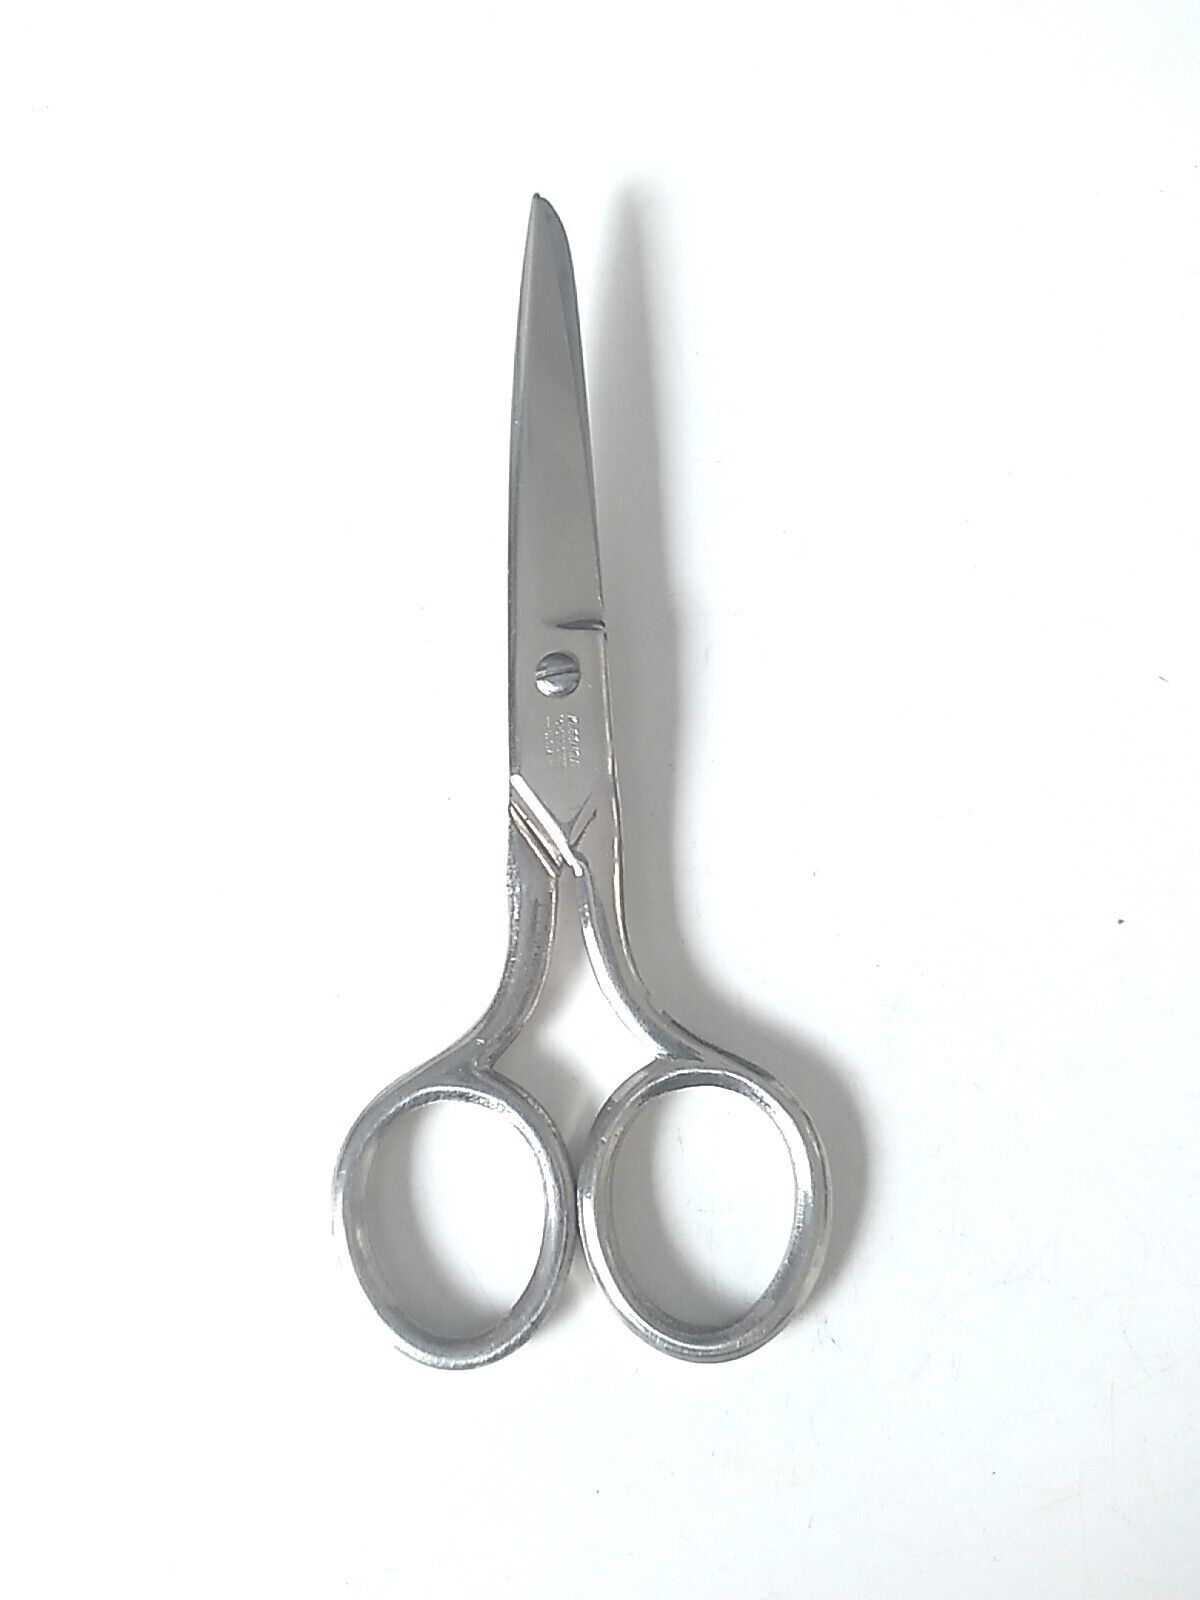 Vintage Kleencut Forged Steel Scissors Shears USA 5 1/8\